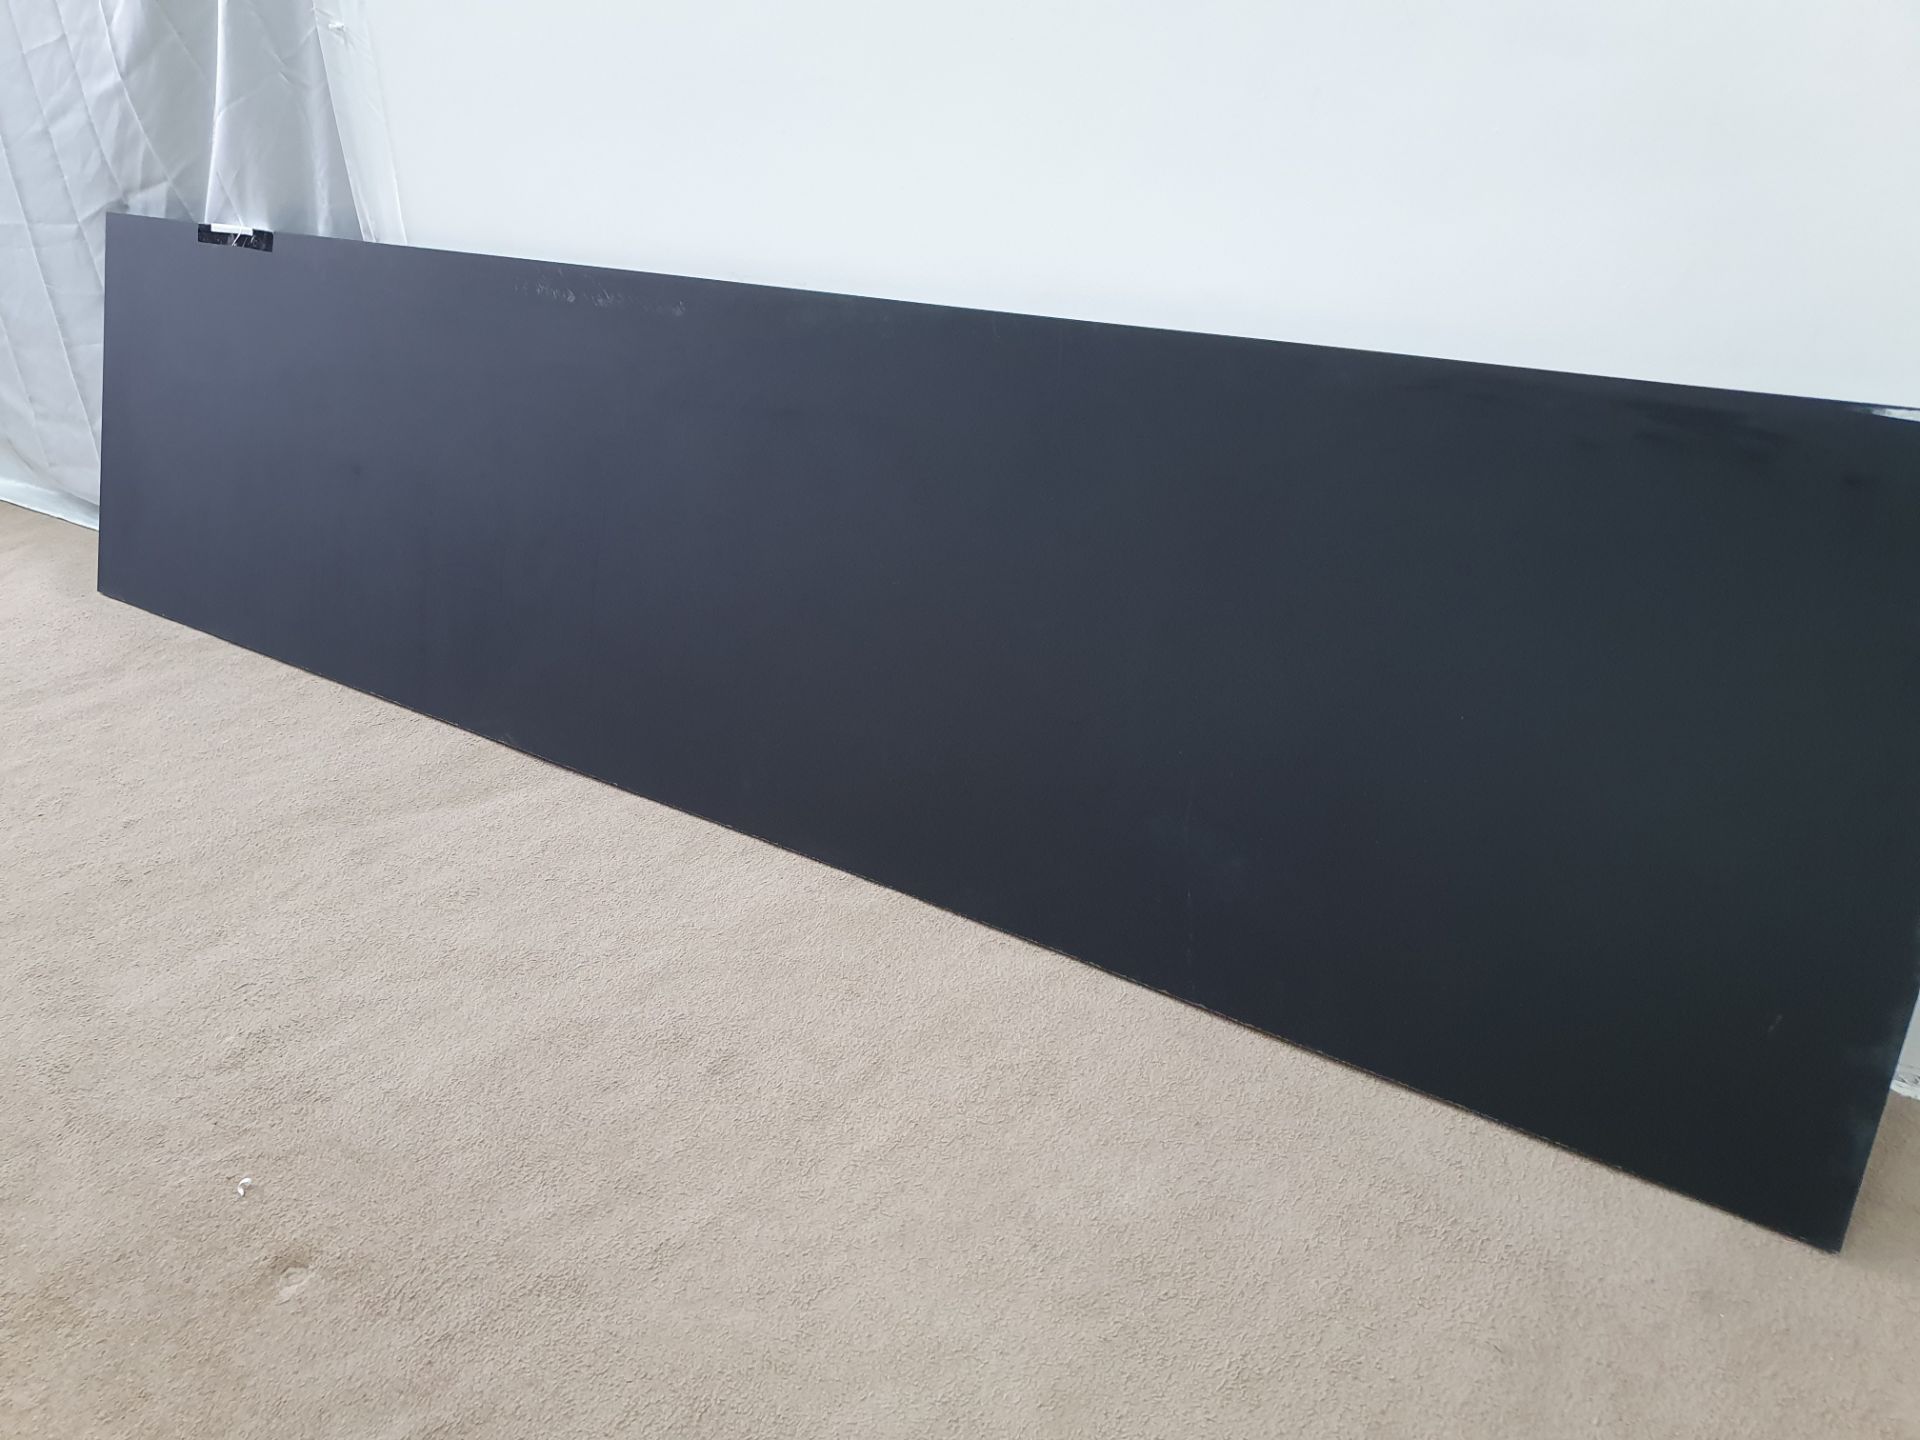 Wrens Arden Black Luxury Laminate Worktop RRP £320 , 3m x 600mm x 22mm - Image 2 of 5